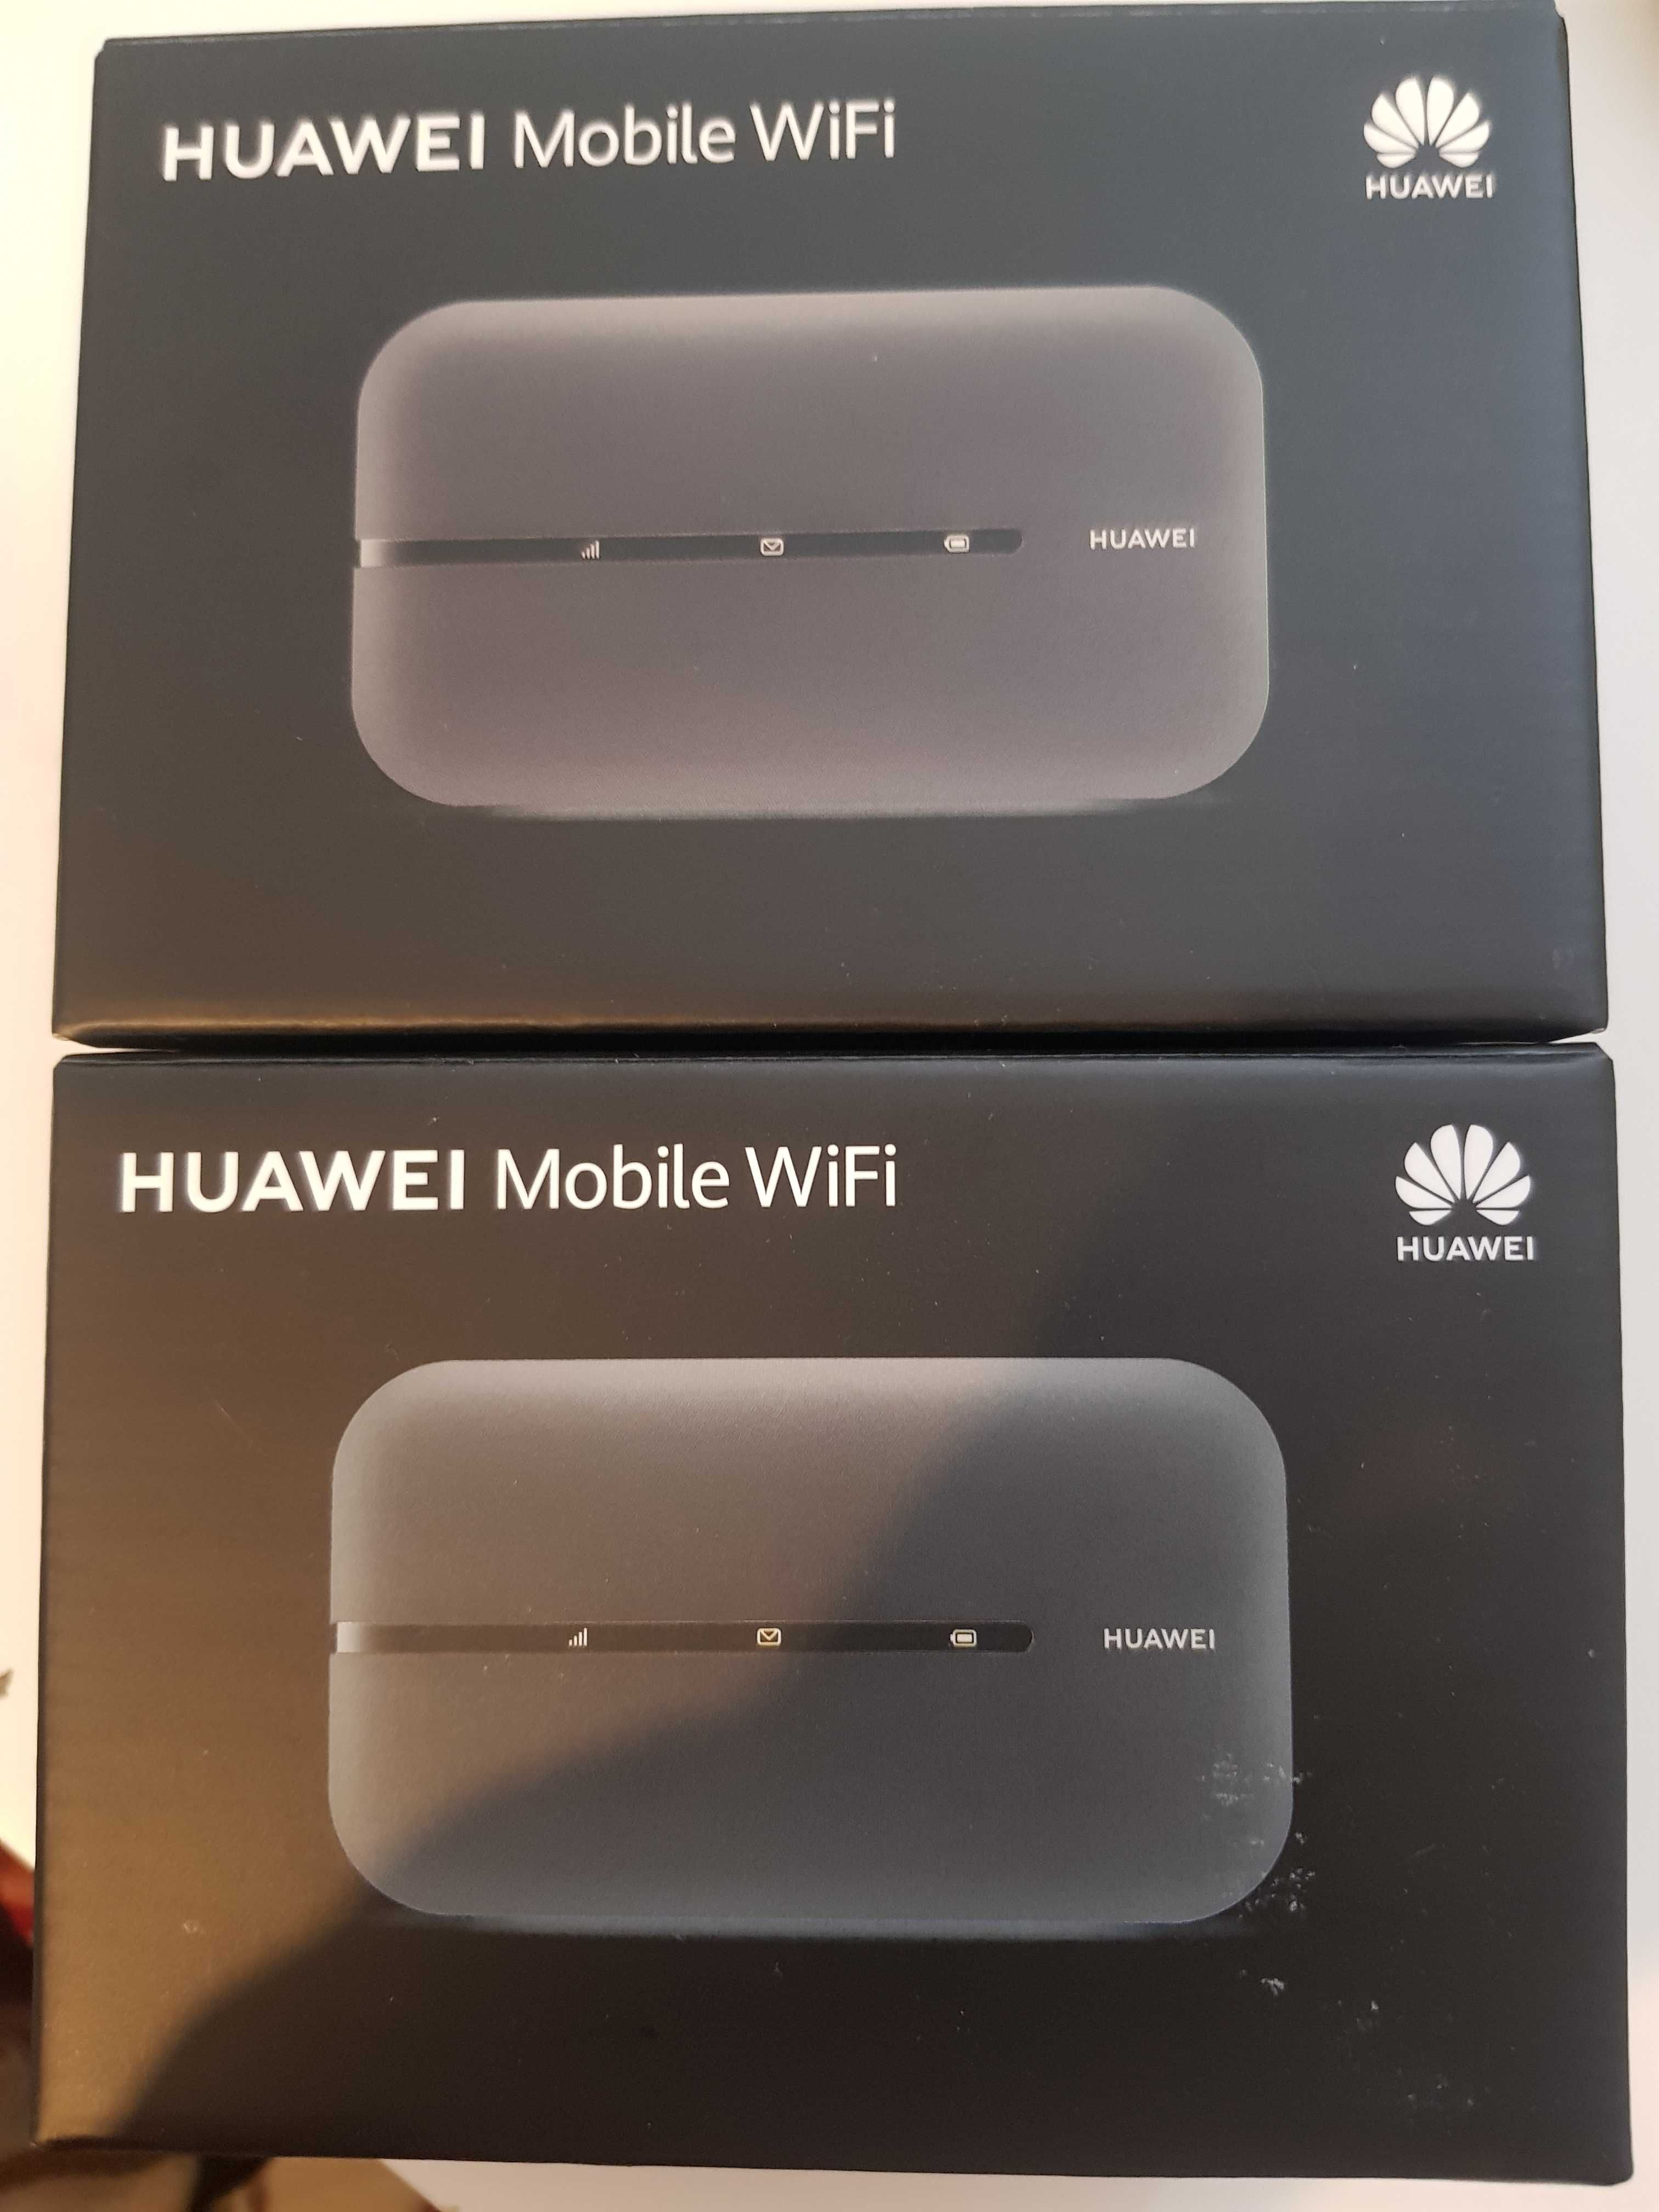 Huawei E5783 routere 4G+/LTE CAT7 modem WiFi 300 Mbps portabil